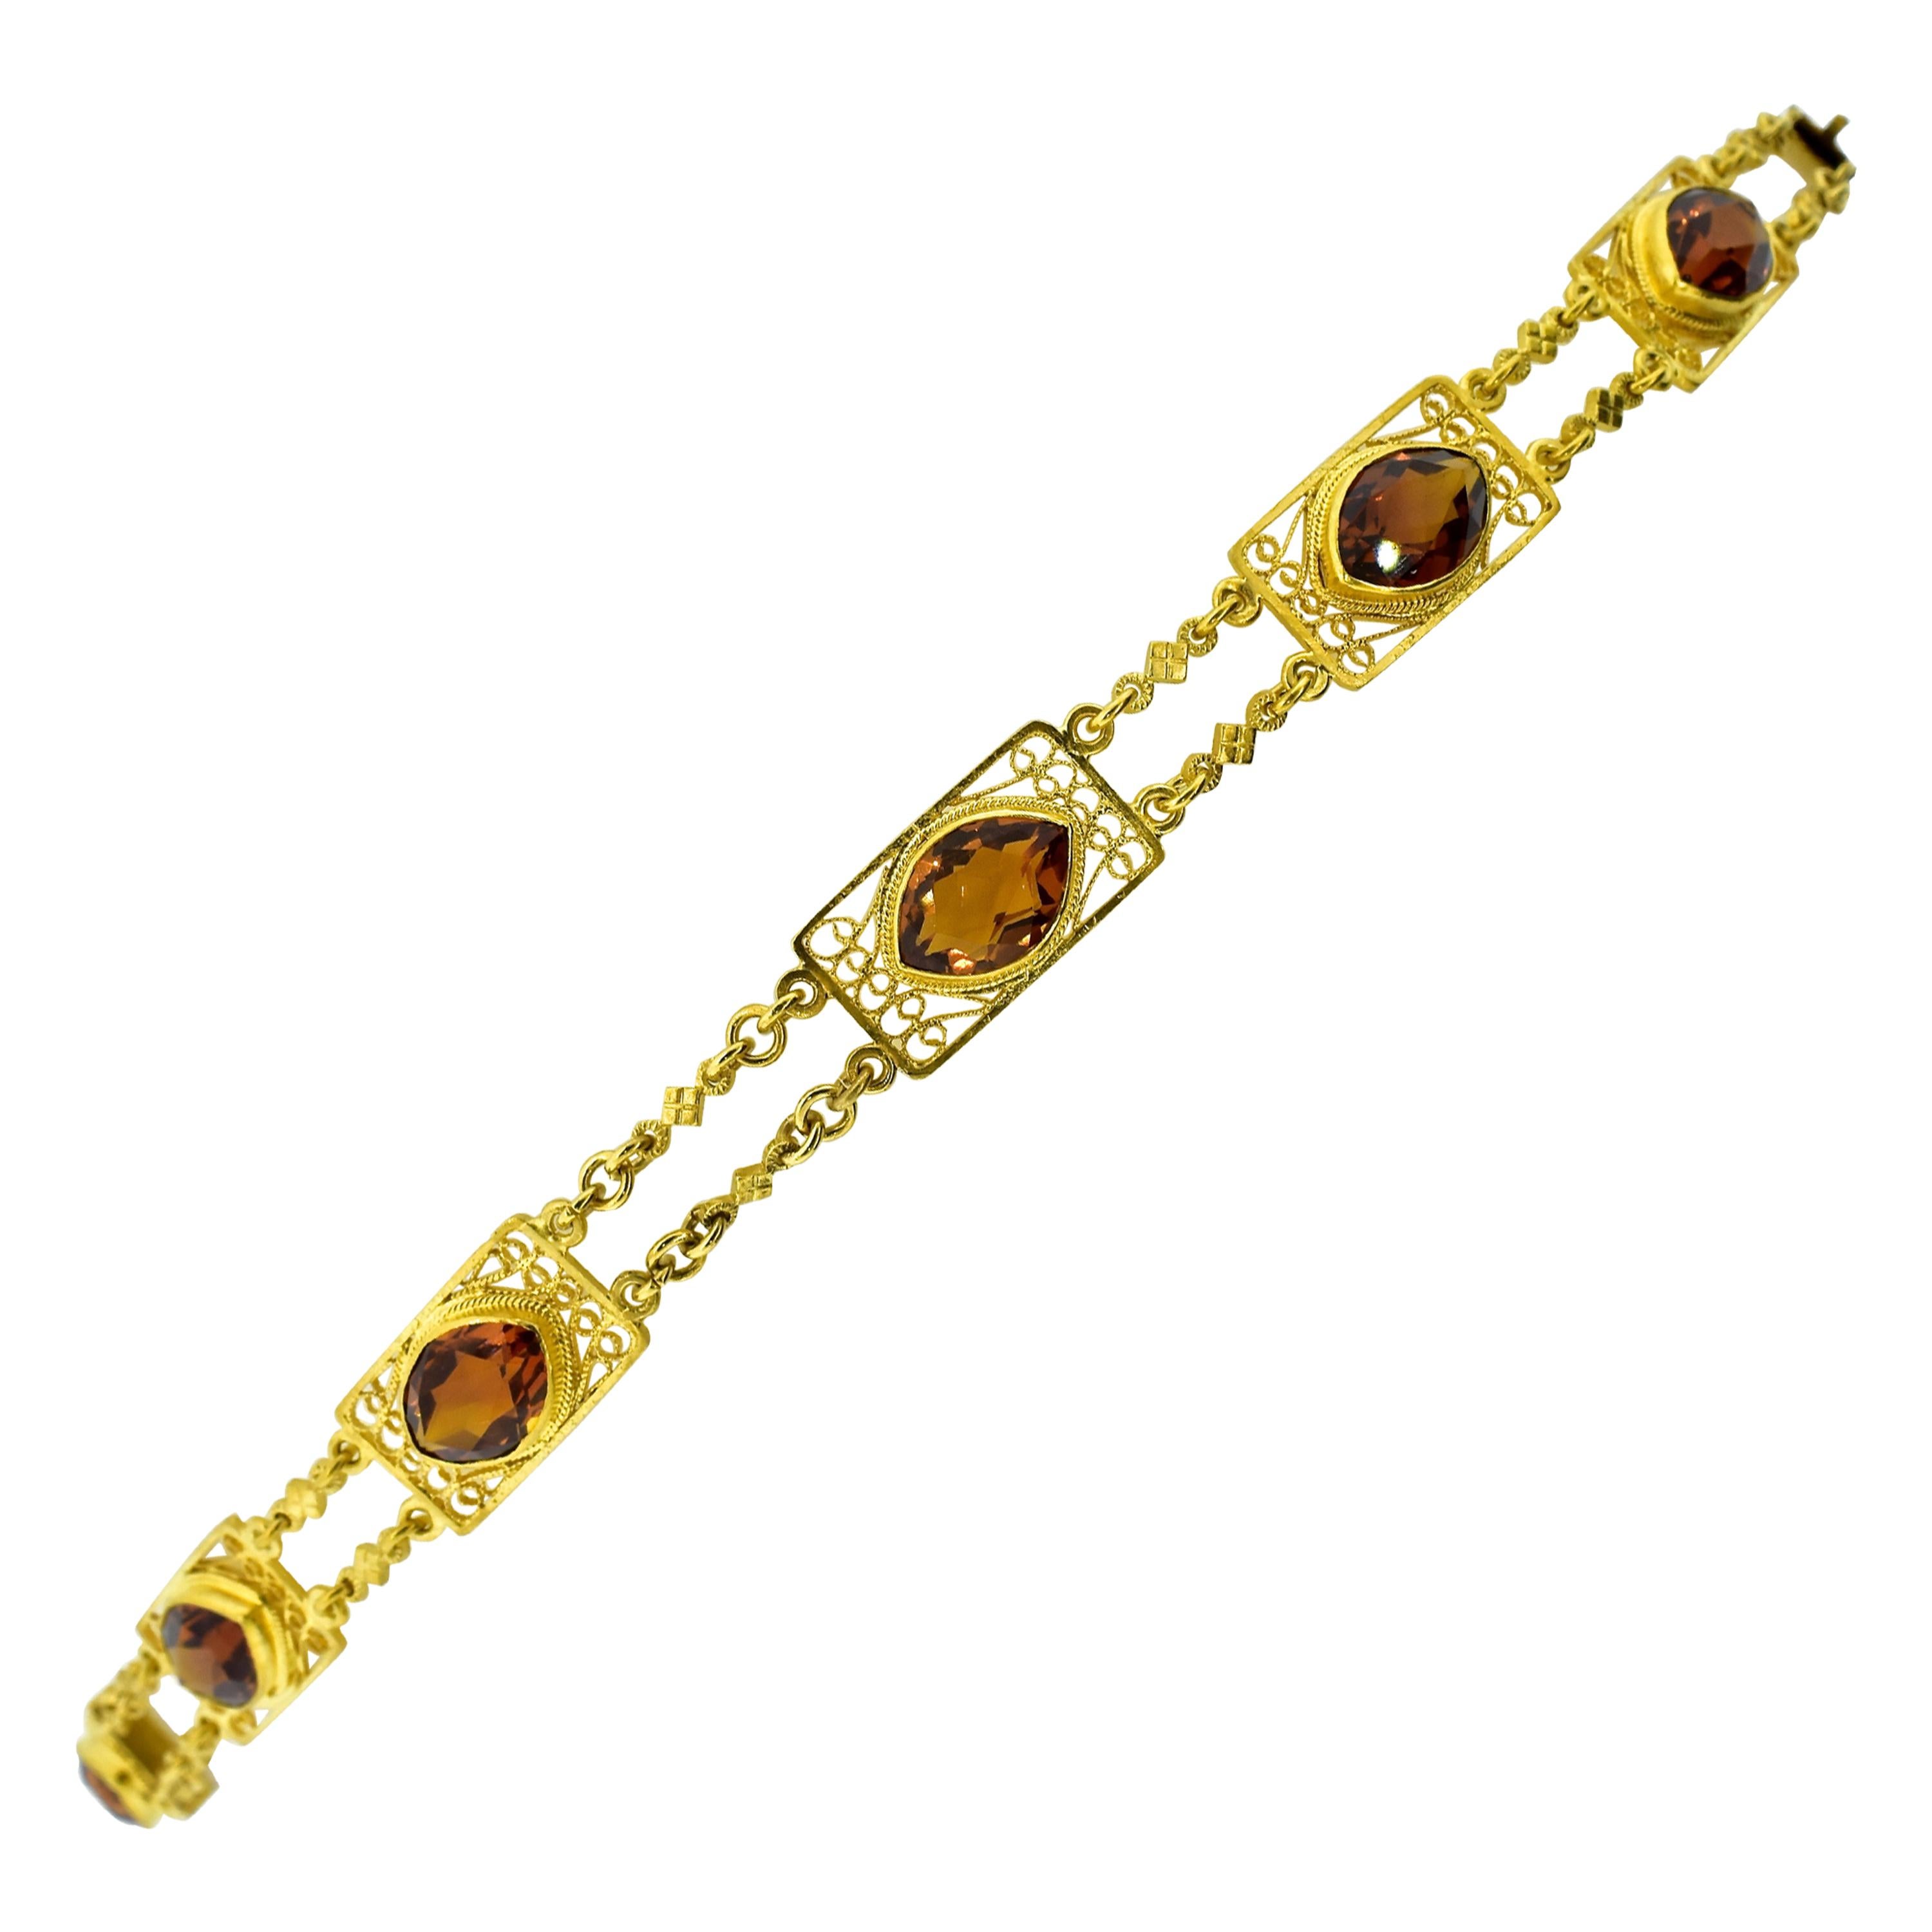 Antique Yellow Gold and Fancy Cut Citrine Bracelet, circa 1905